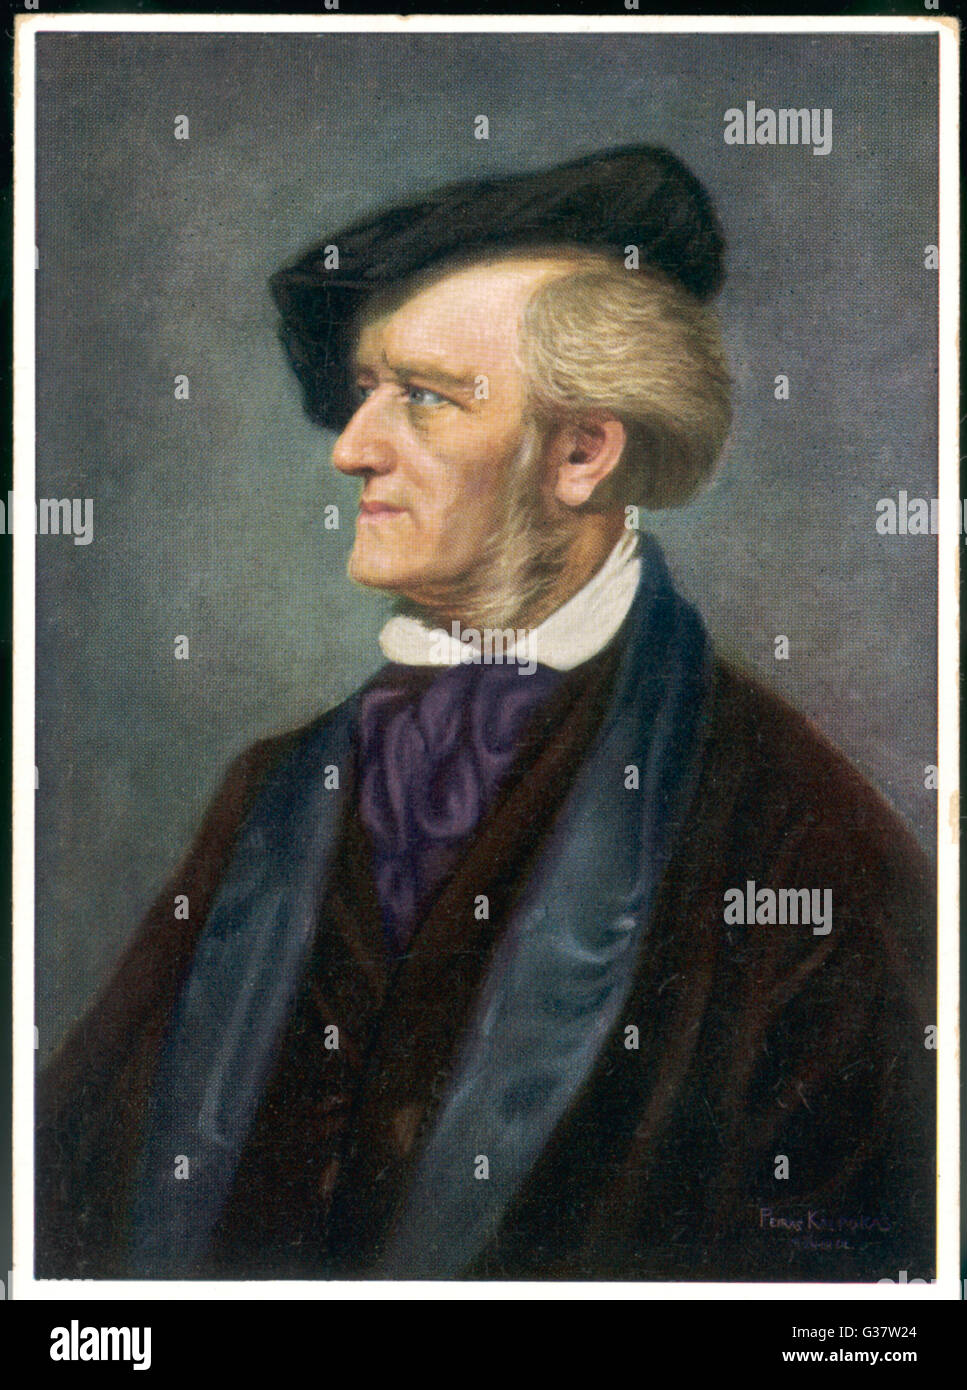 WILHELM RICHARD WAGNER, compositeur allemand Date : 1813-1883 Banque D'Images